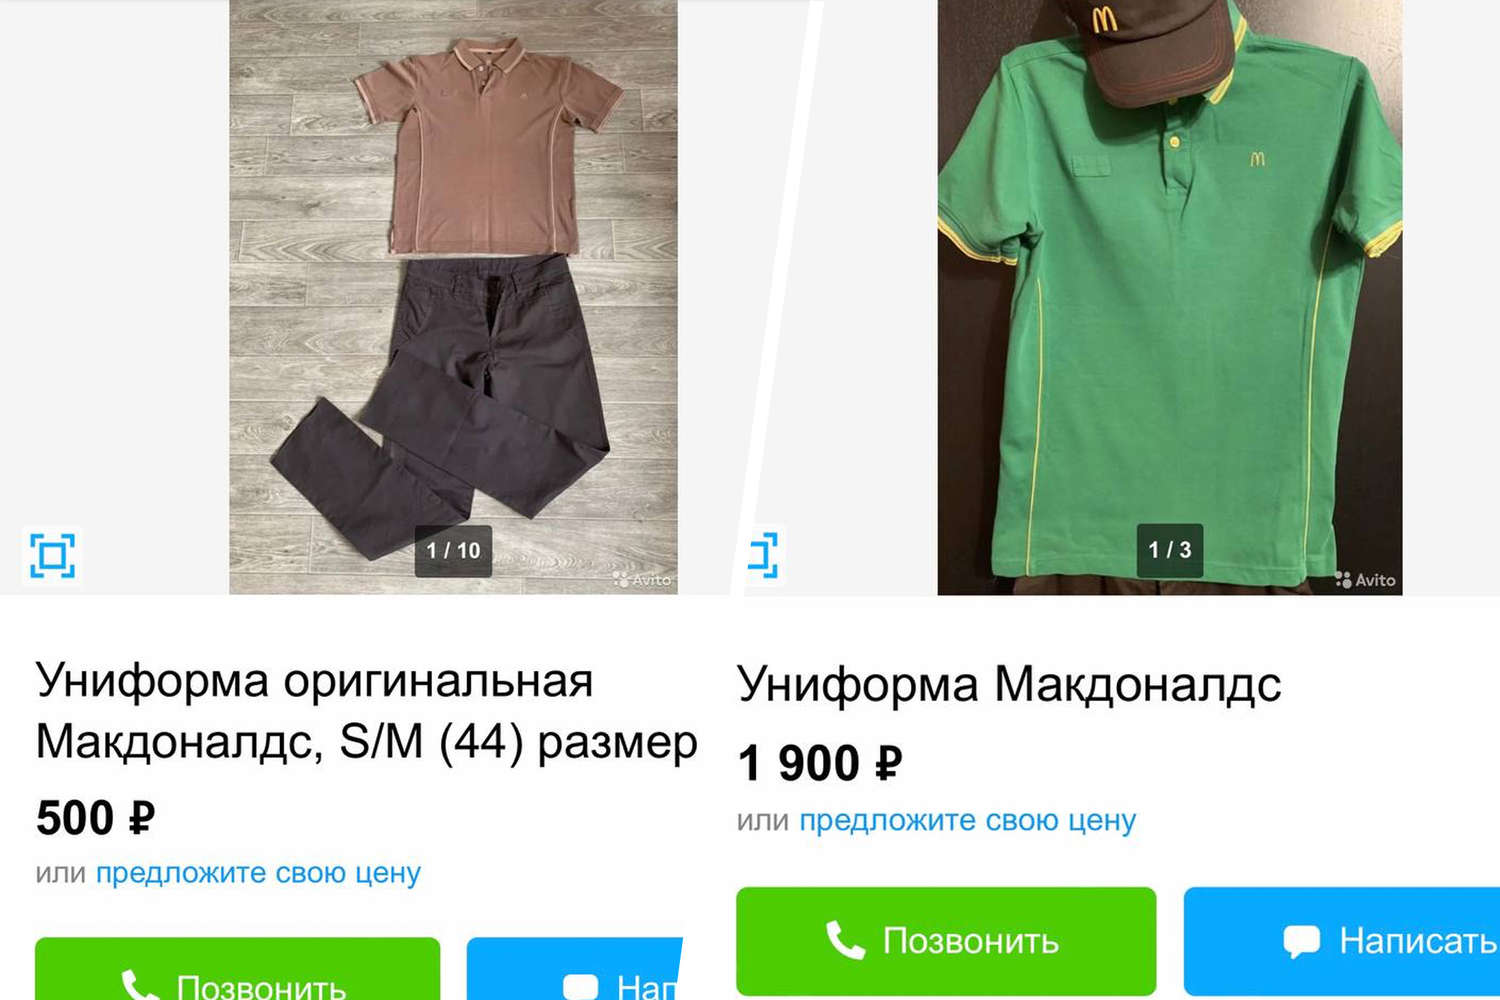 На "Авито" начали продавать униформу сотрудников McDonald's. Фото © Avito.ru